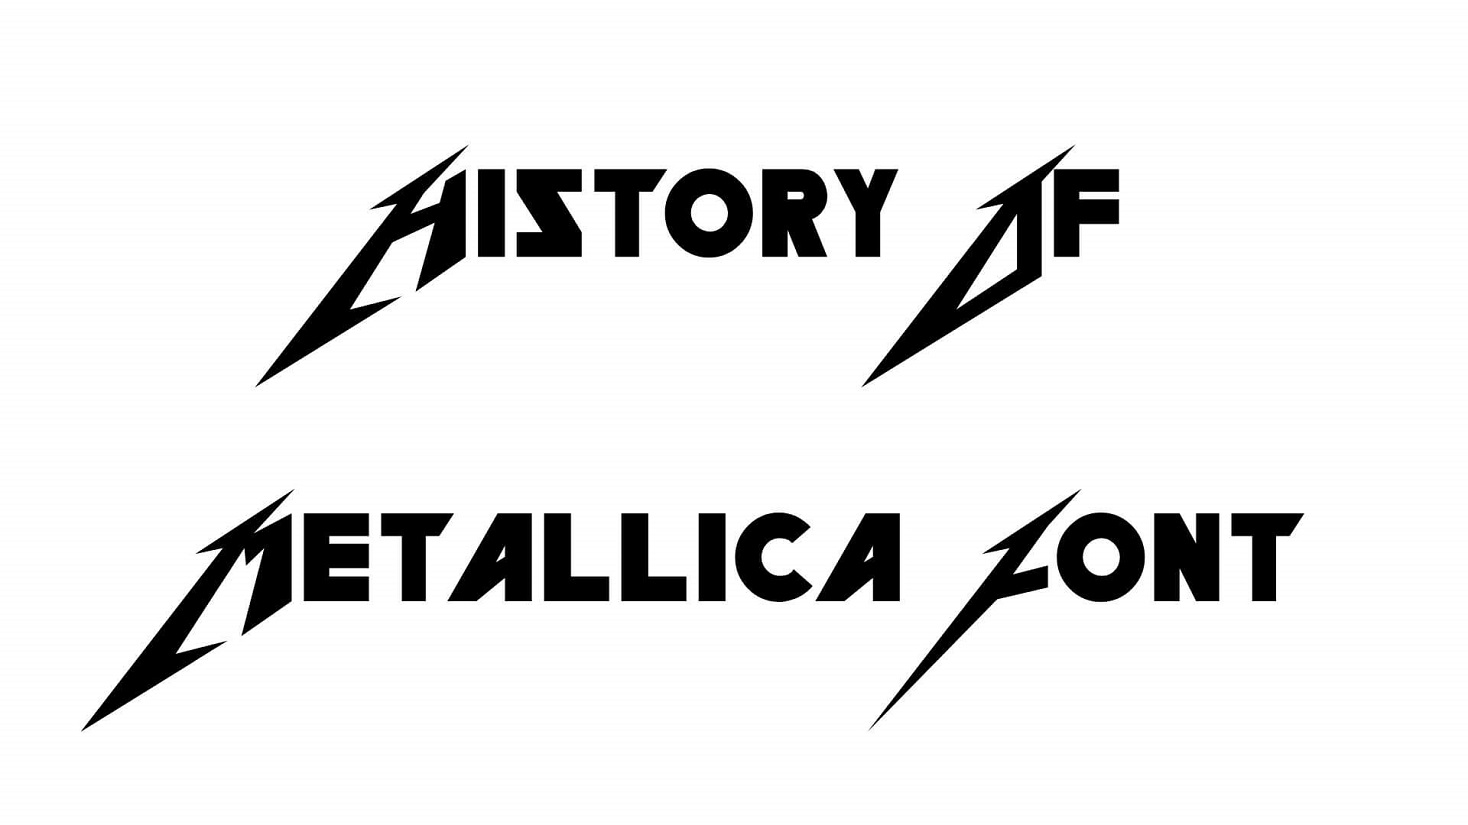 History of Metallica Font